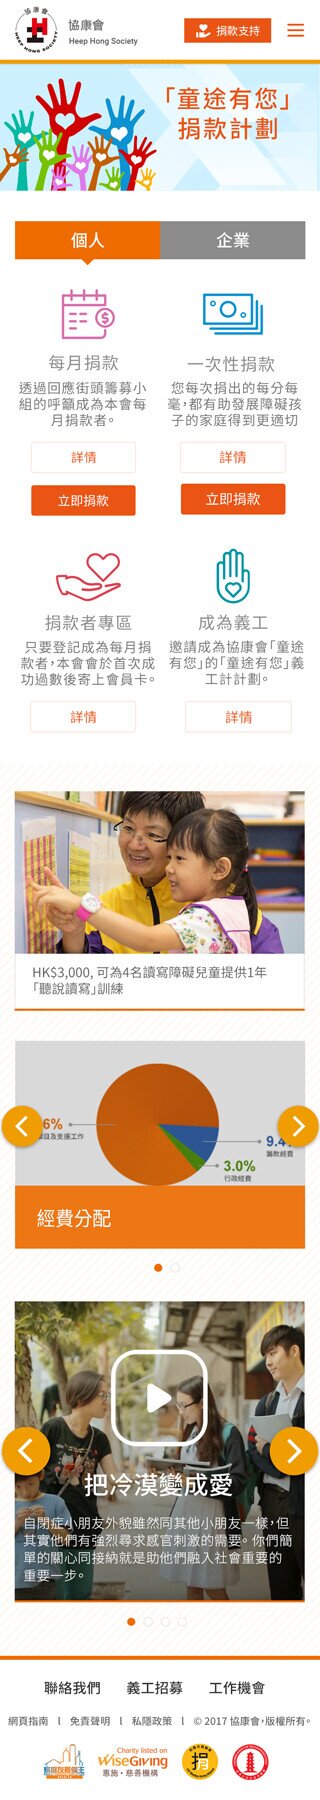 Heep Hong Society website screenshot for mobile version 3 of 5